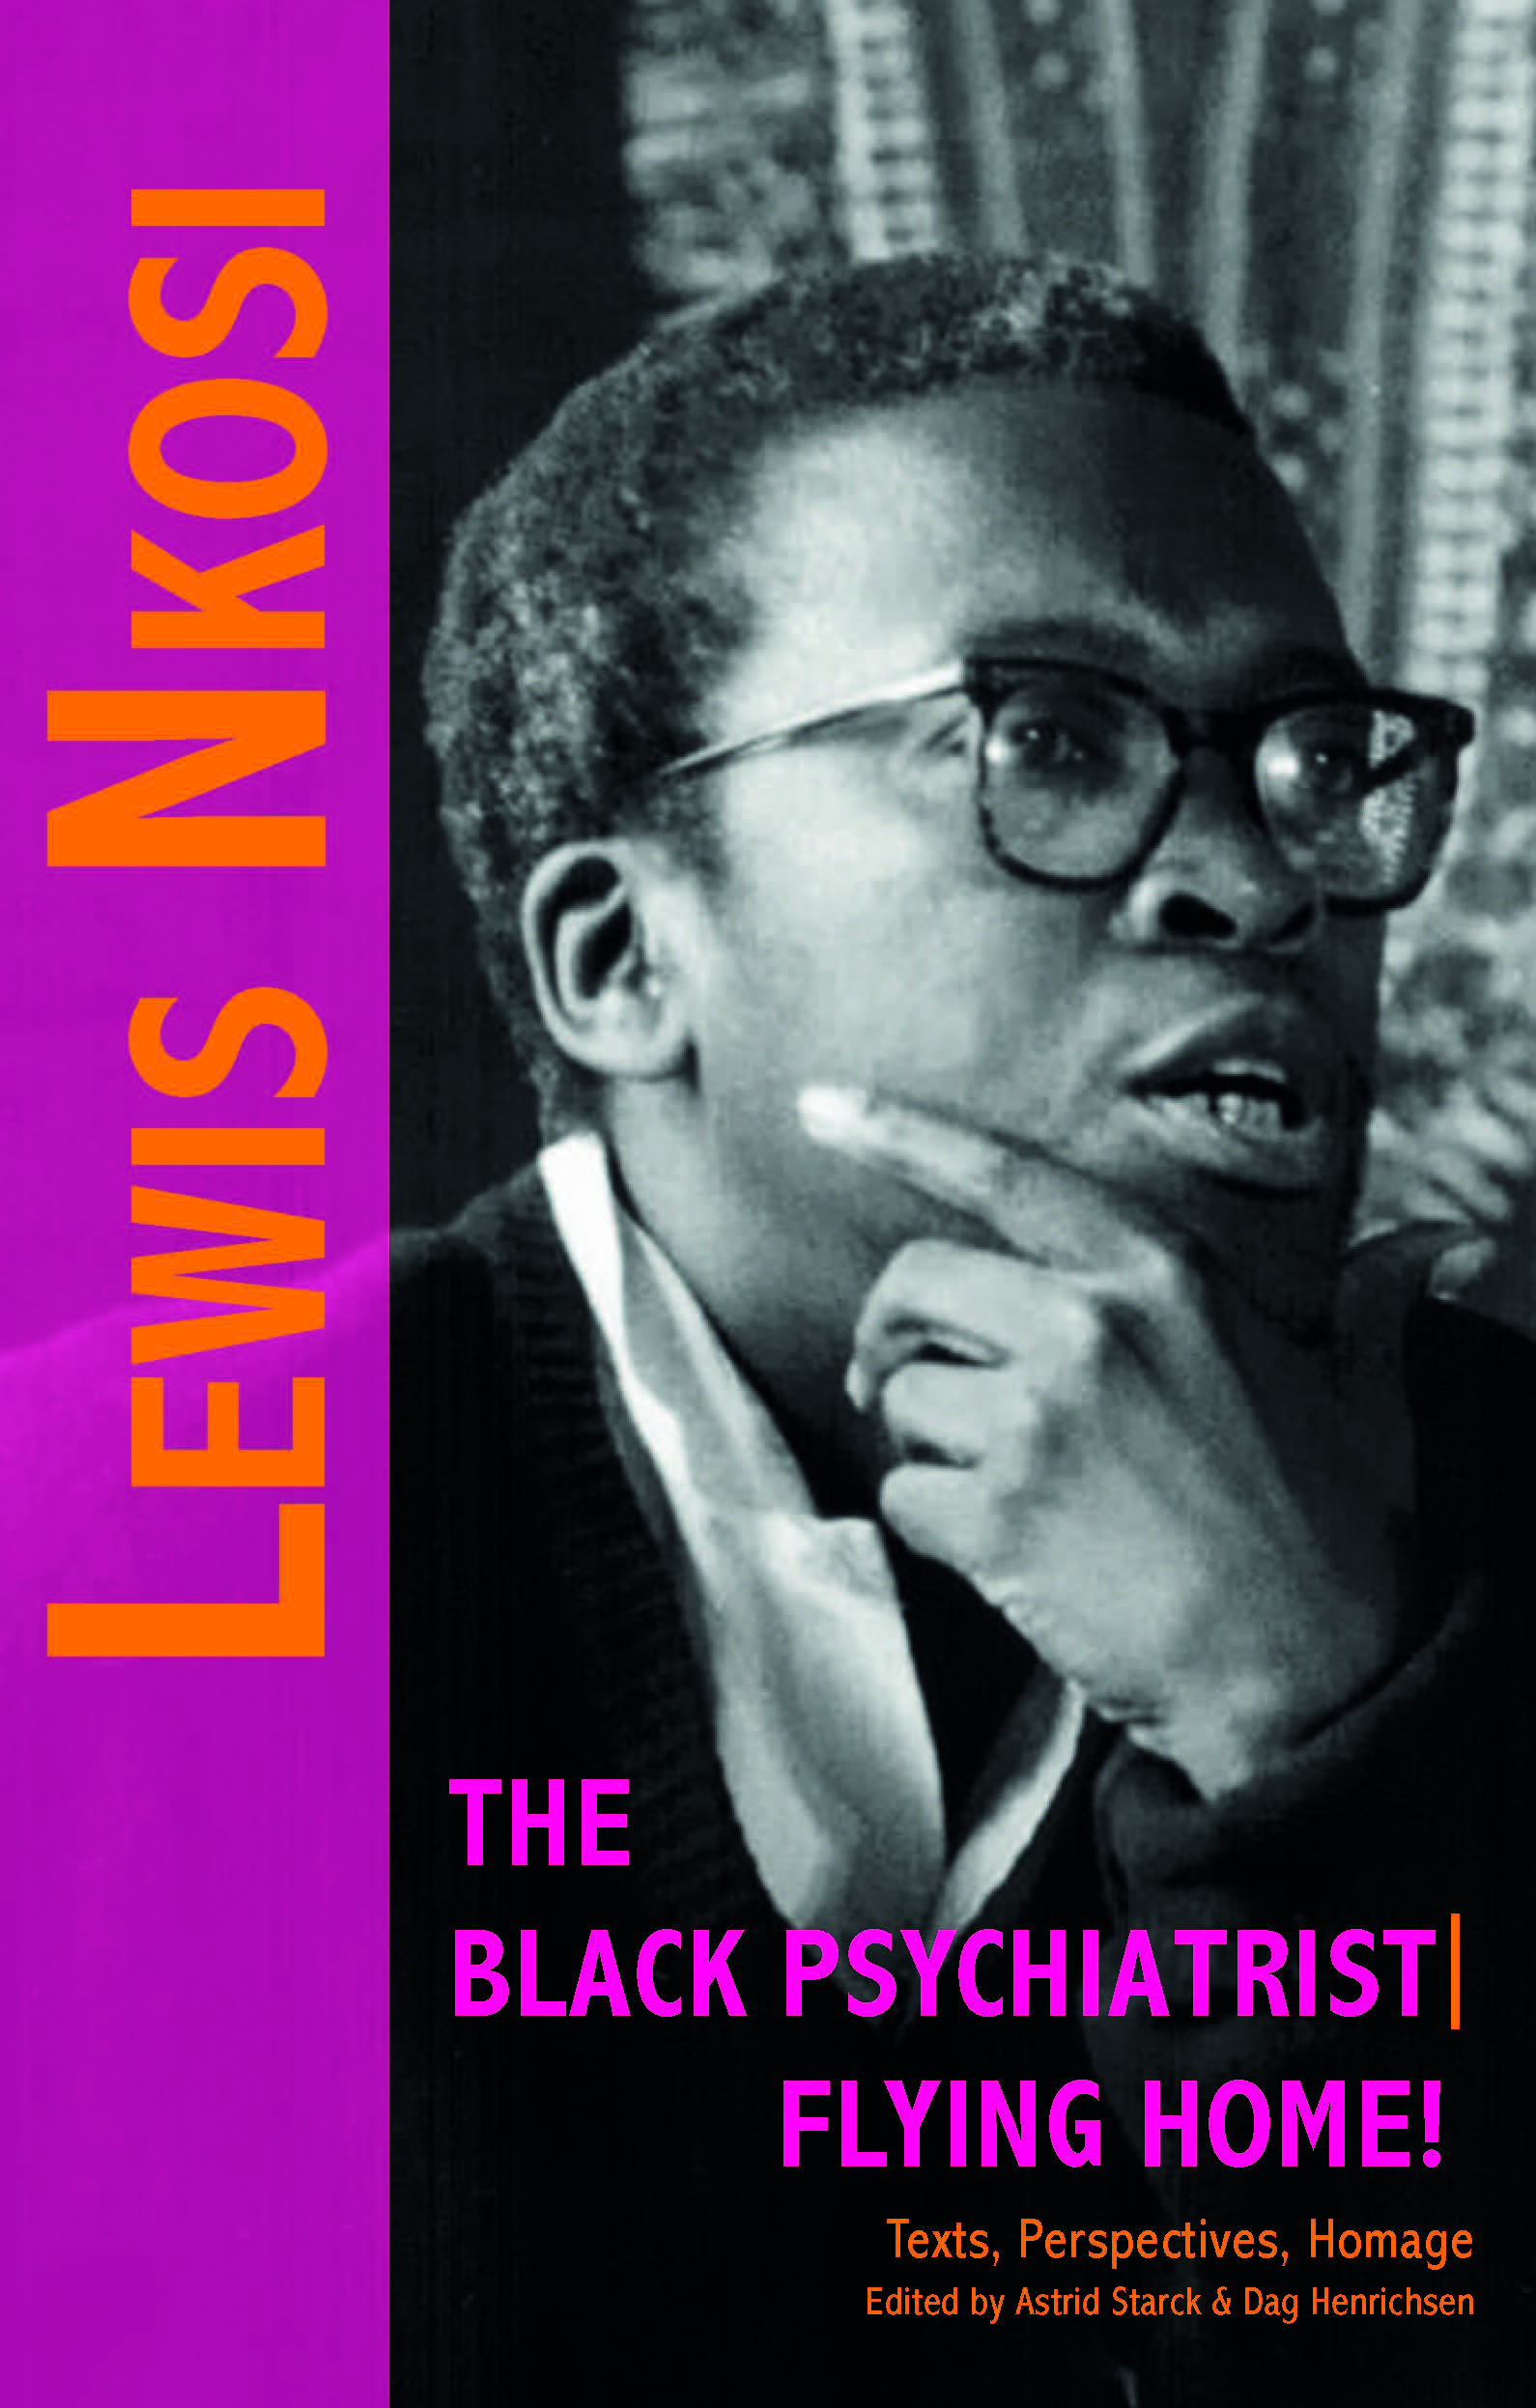 book cover Starck et al. 2021 Lewis Nkosi.